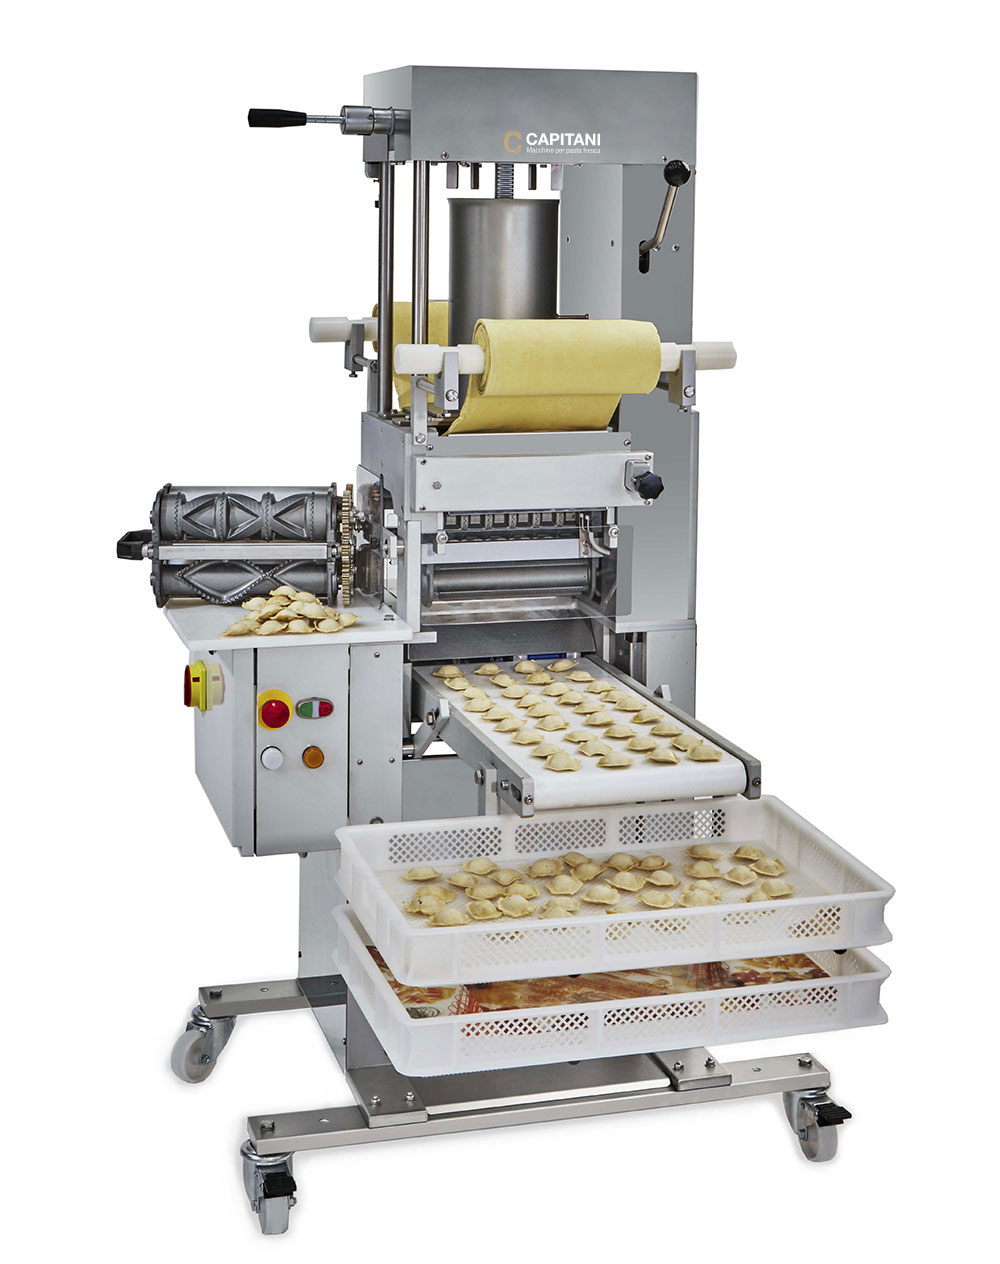 RS250 raviolatrici - CAPITANI - Macchine per pasta fresca